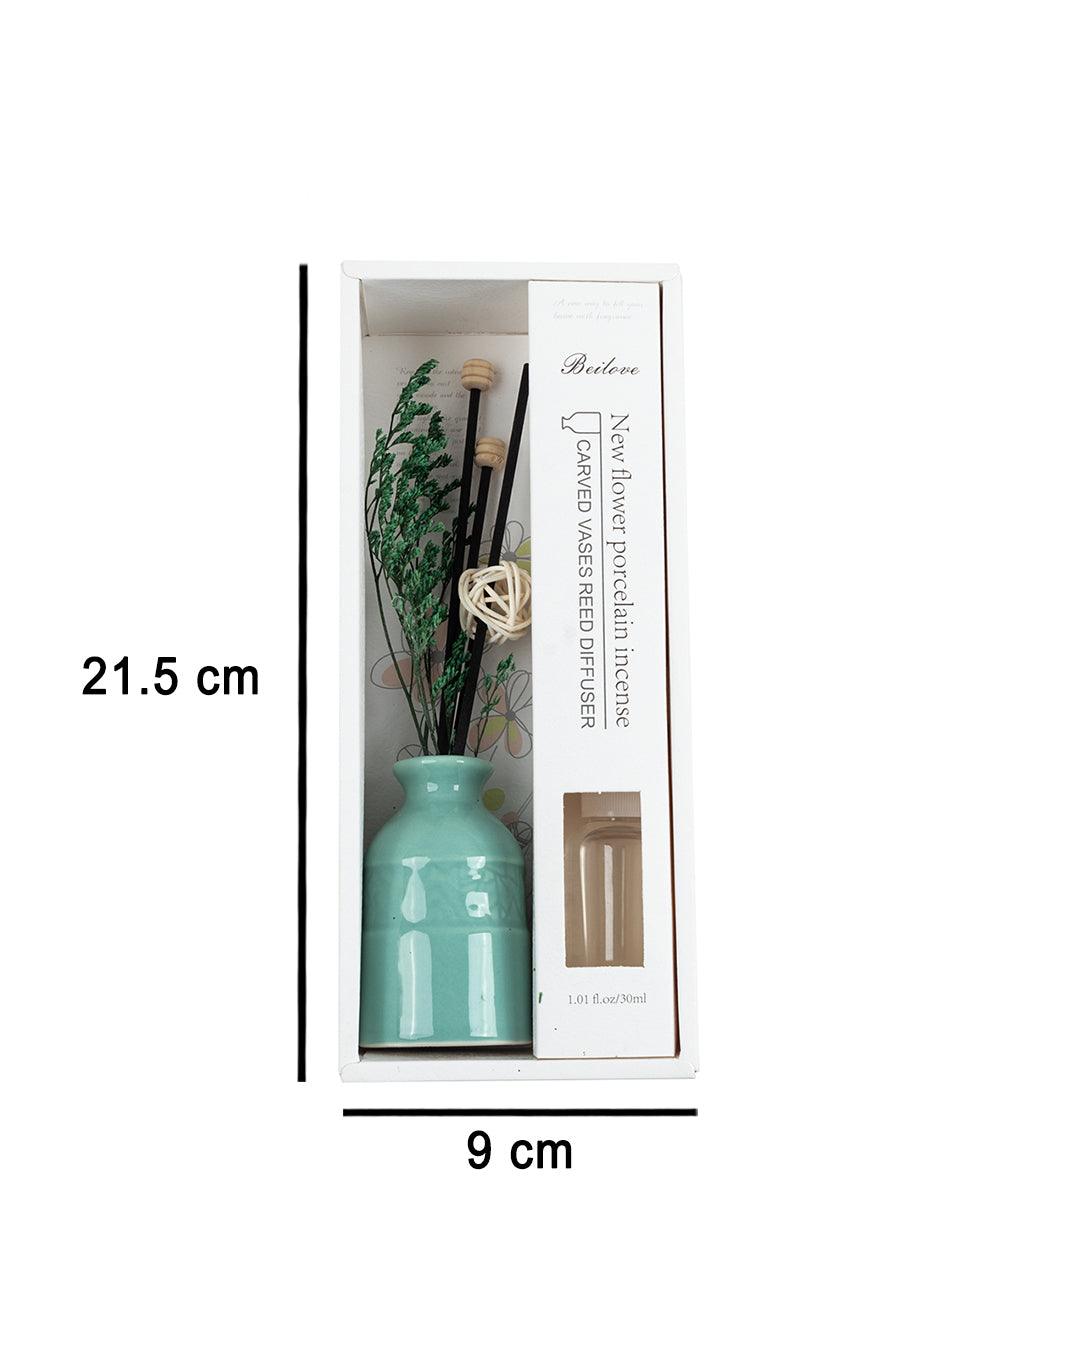 Reed Diffuser Set, Jasmine Fragrance Pot & Reed Stick, Ceramic, Green, 30 mL - MARKET 99